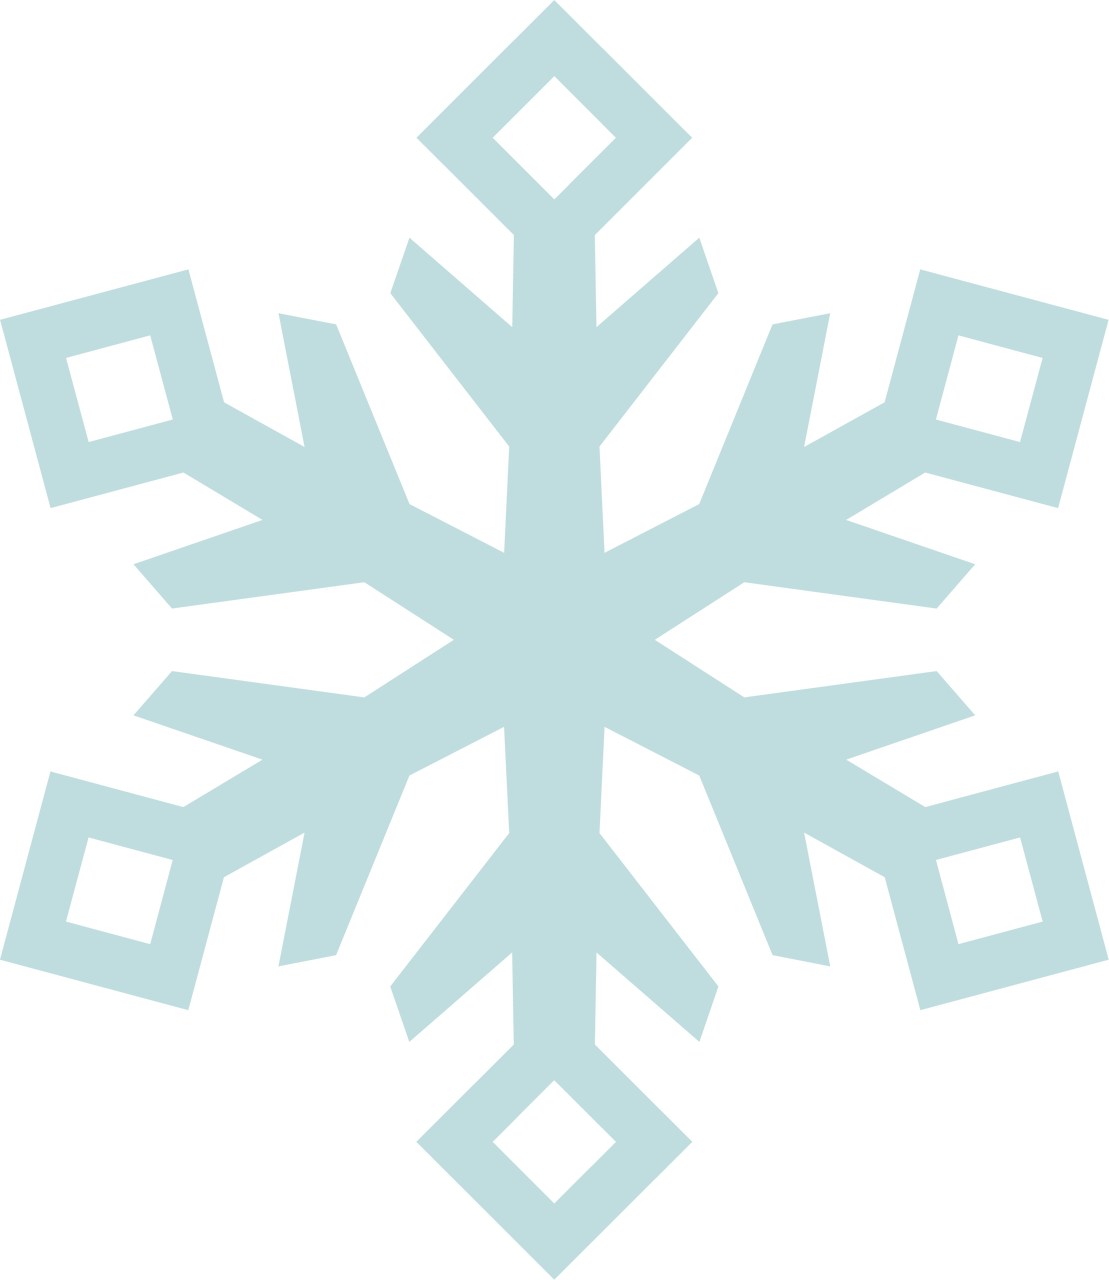 snowflake icon svg